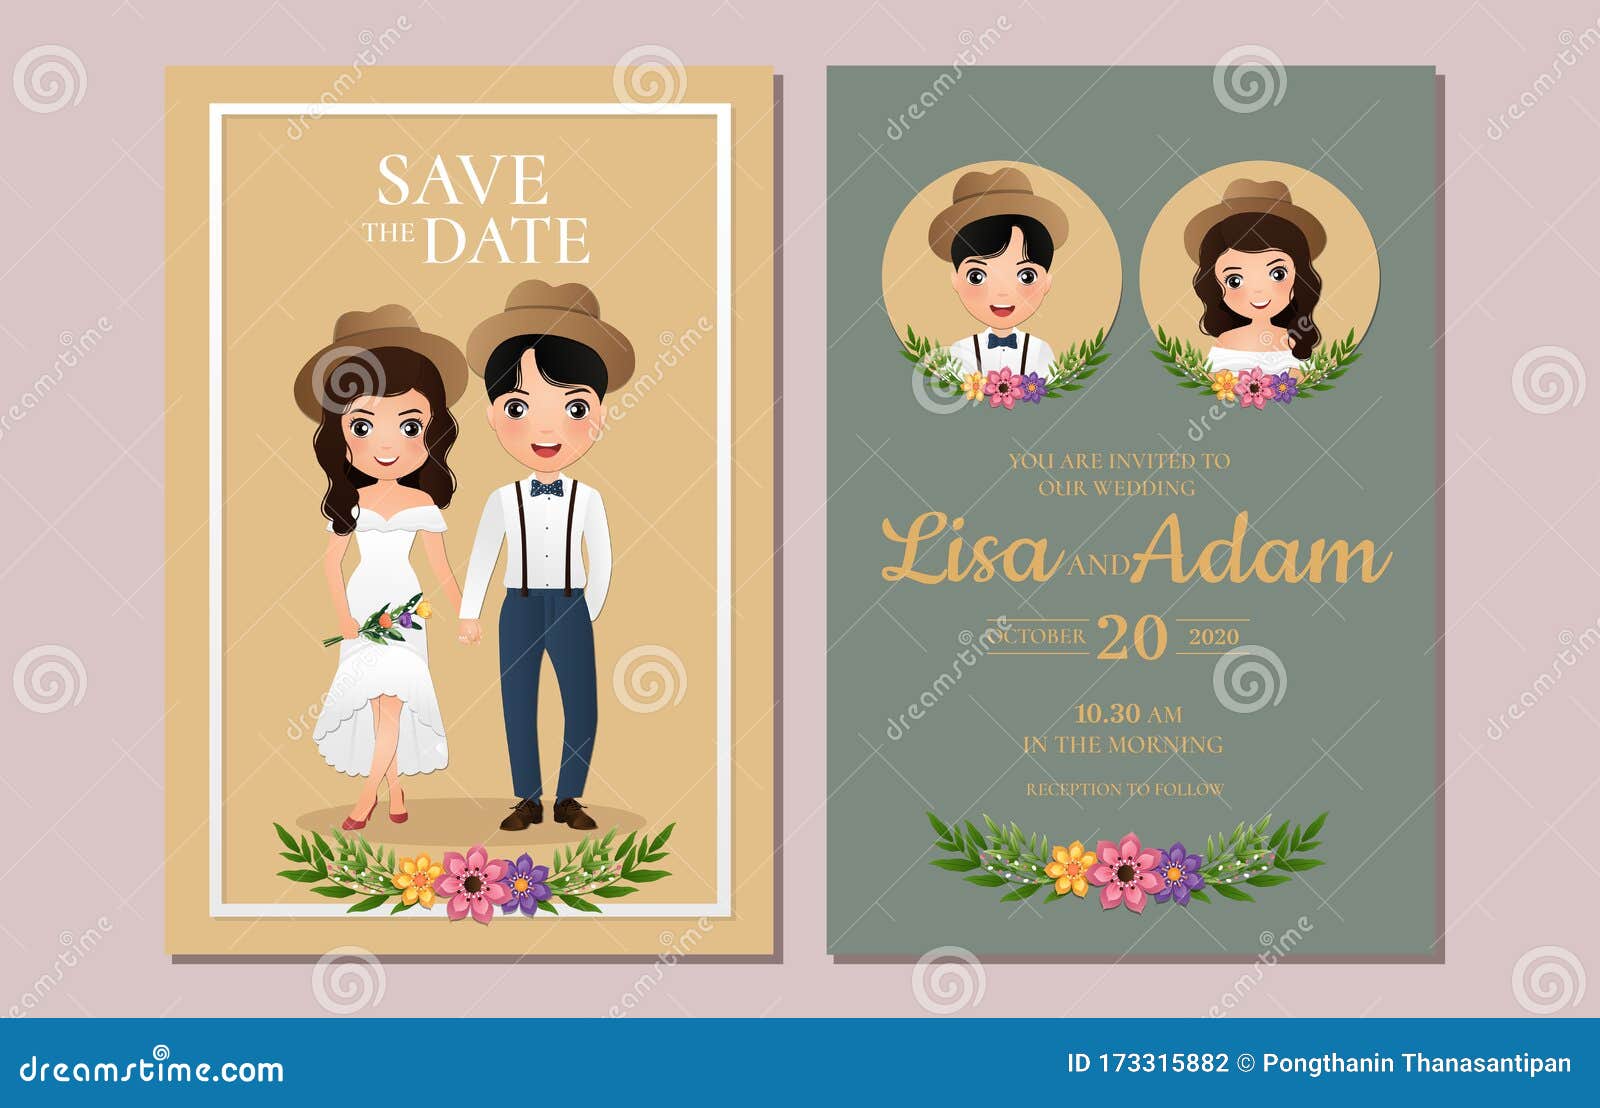 Wedding Invitation Card the Bride and Groom Cute Couple Cartoon ...